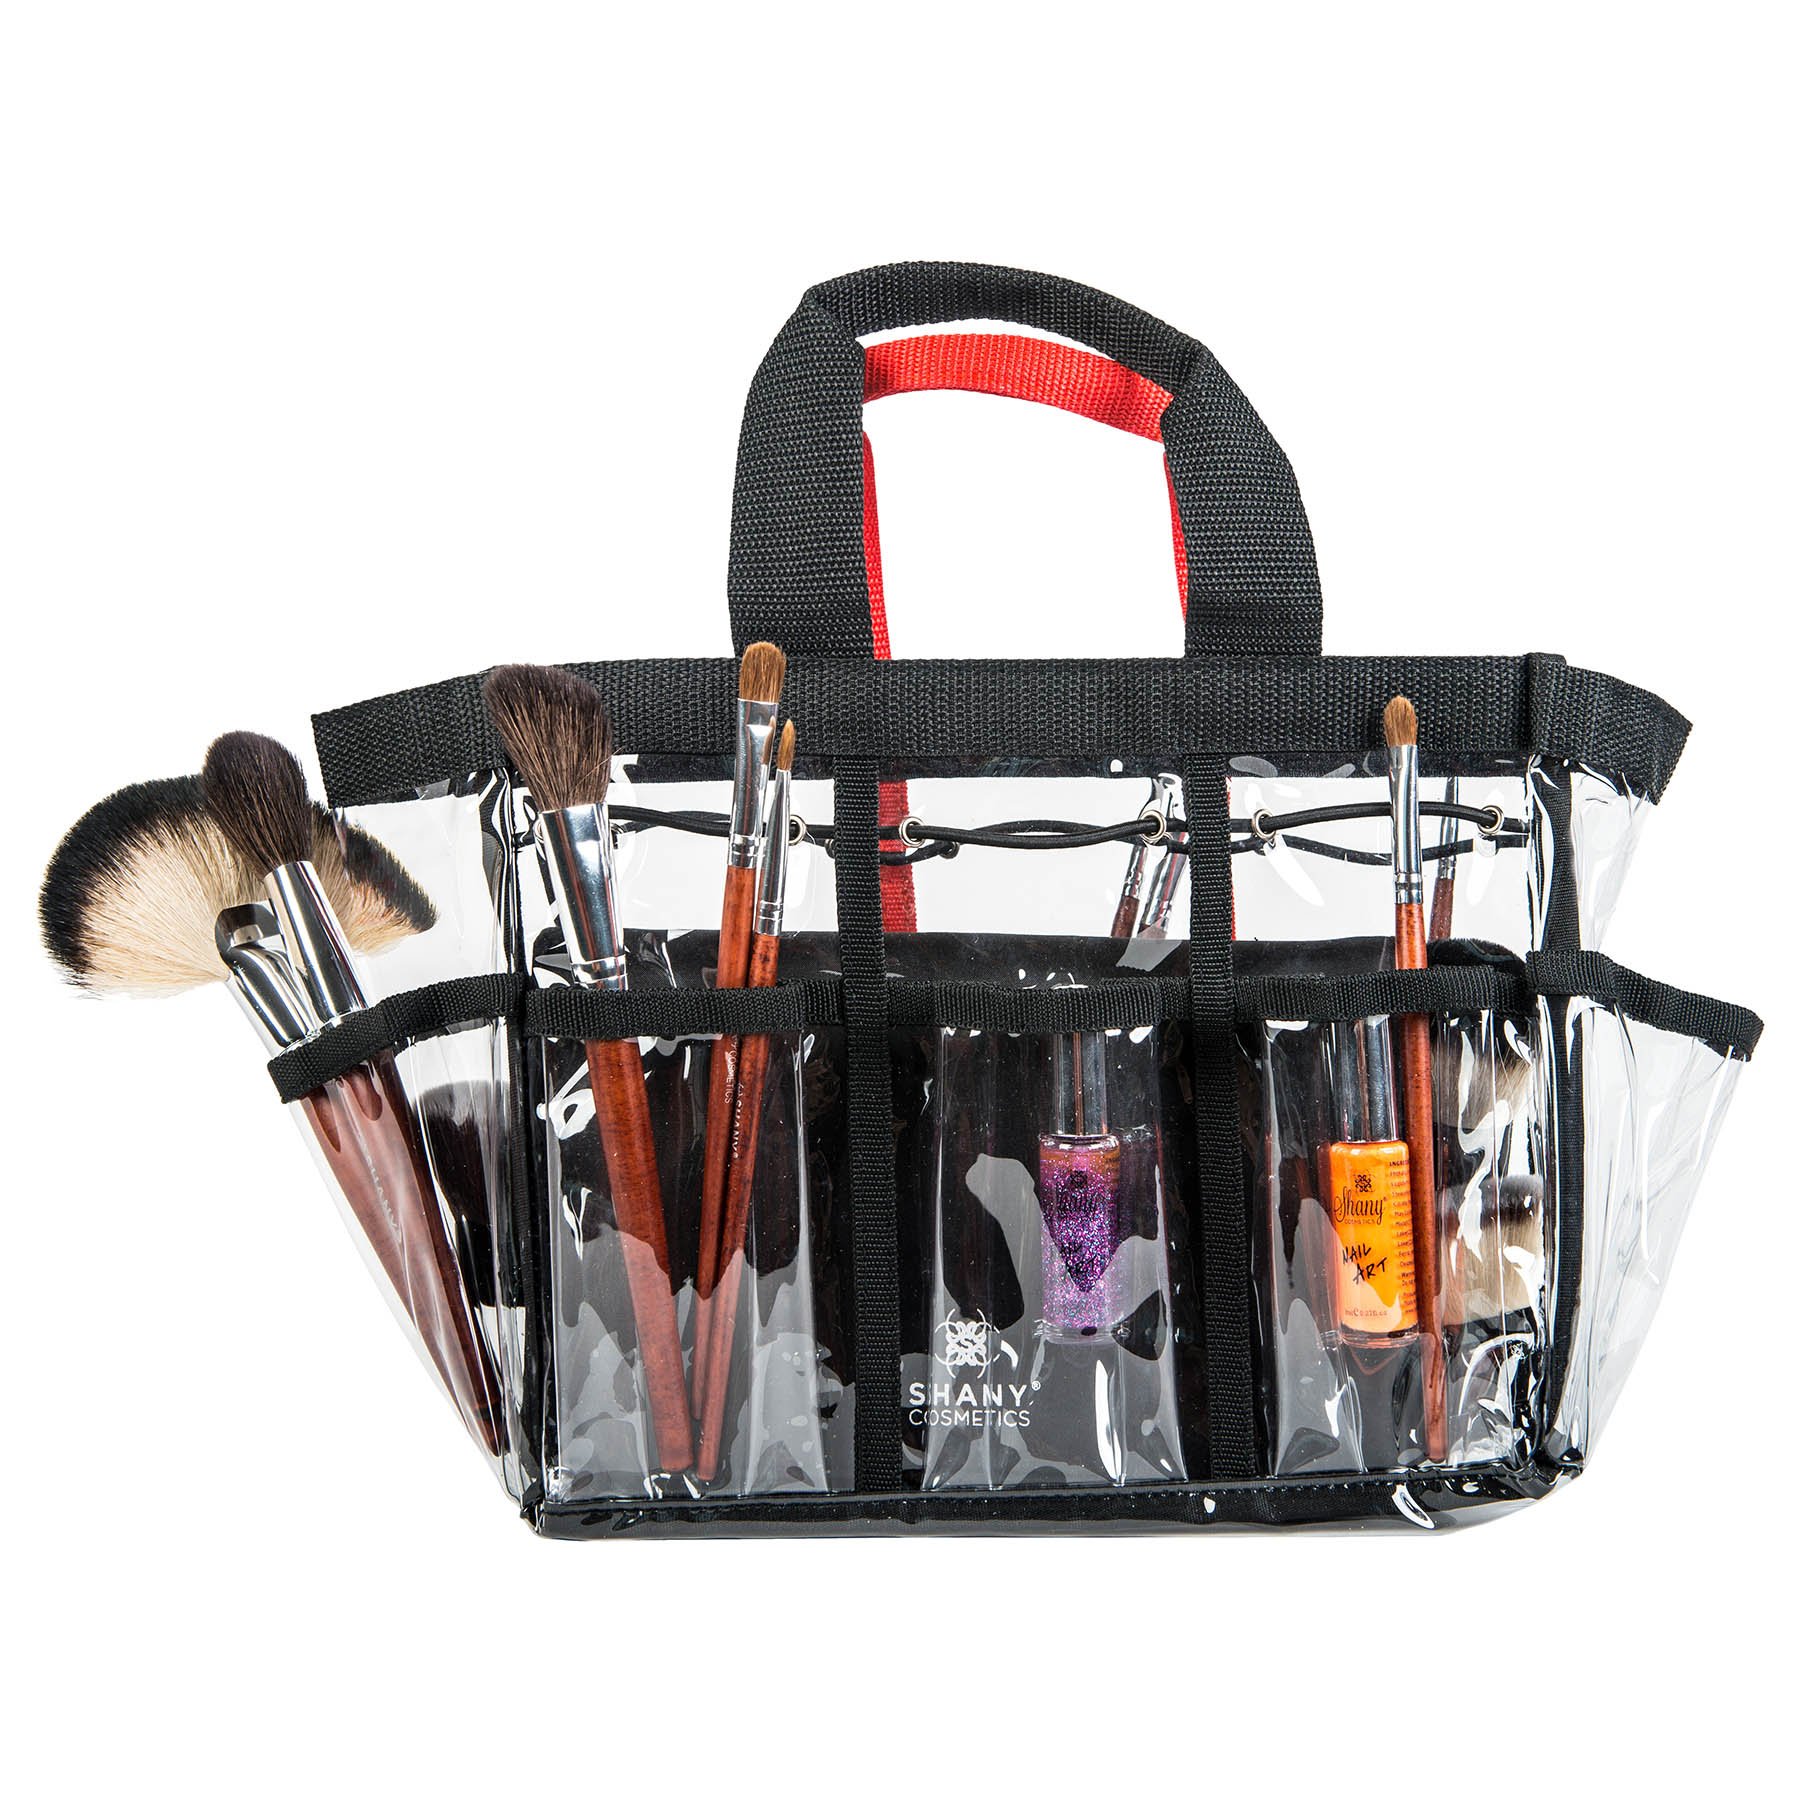 SHANY Clear Travel Makeup Bag - Cosmetics Organizer - Ready Set